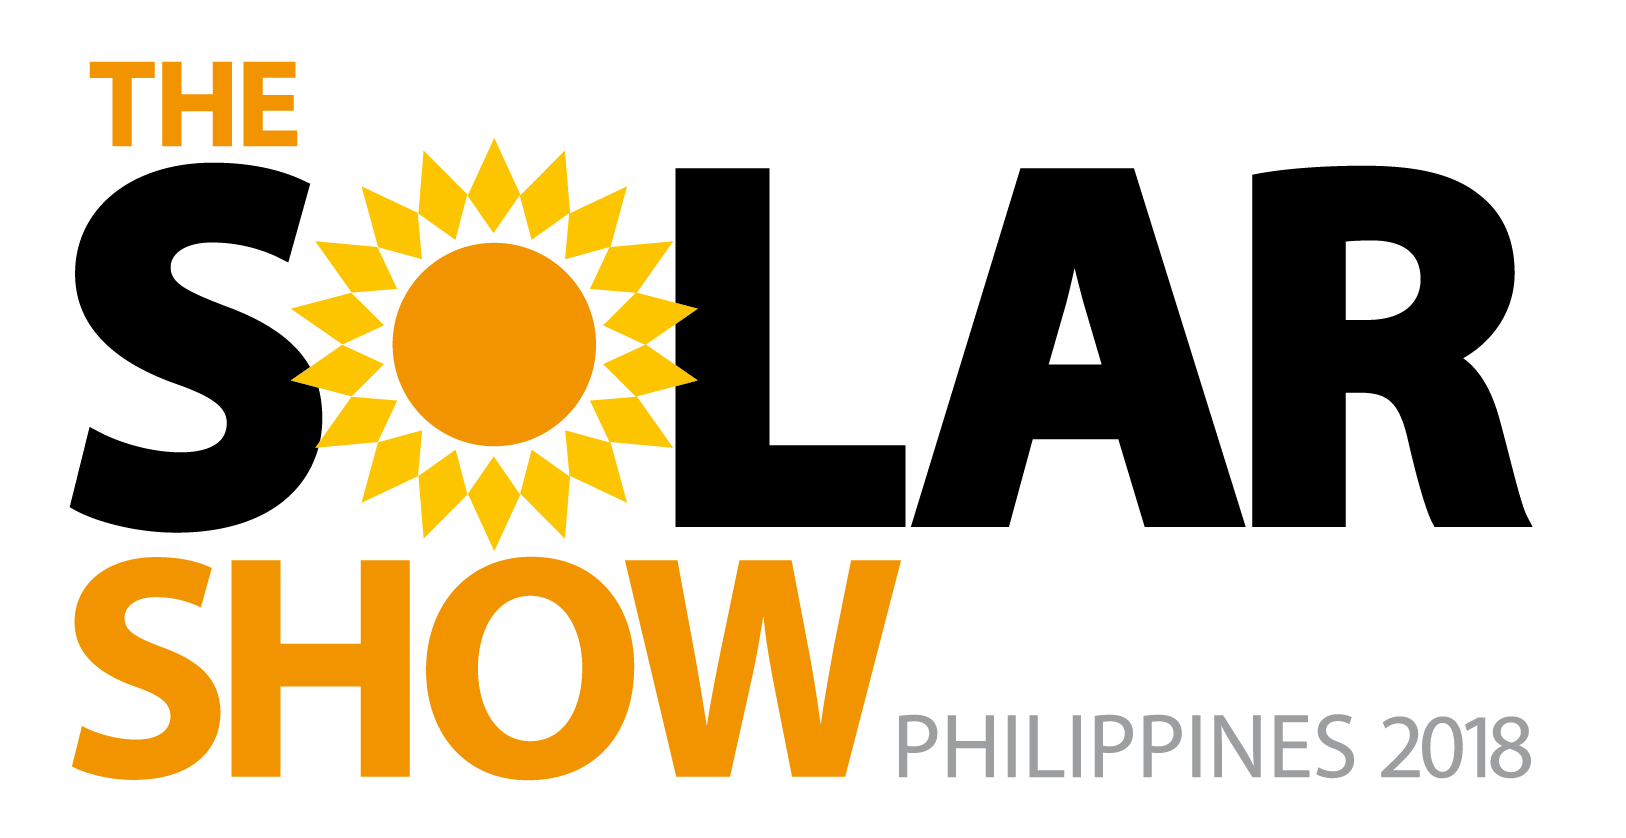 The Solar Show Philippines